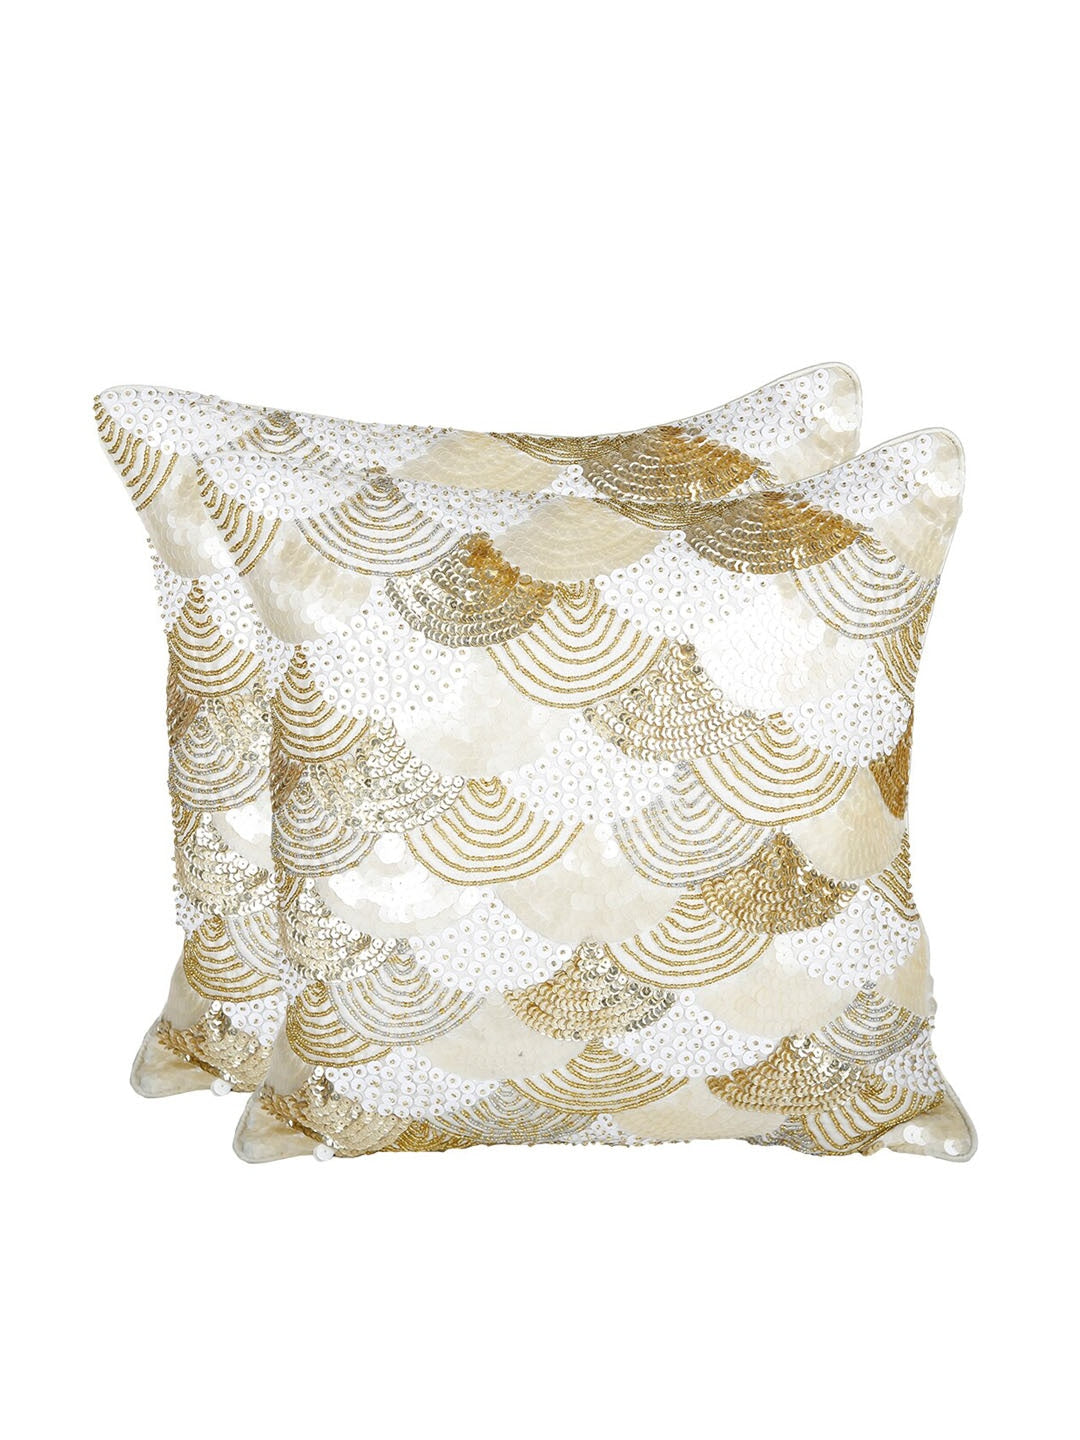 Set of 2 White & Gold-Coloured Embellished Square Velvet Sustainable Cushion Covers